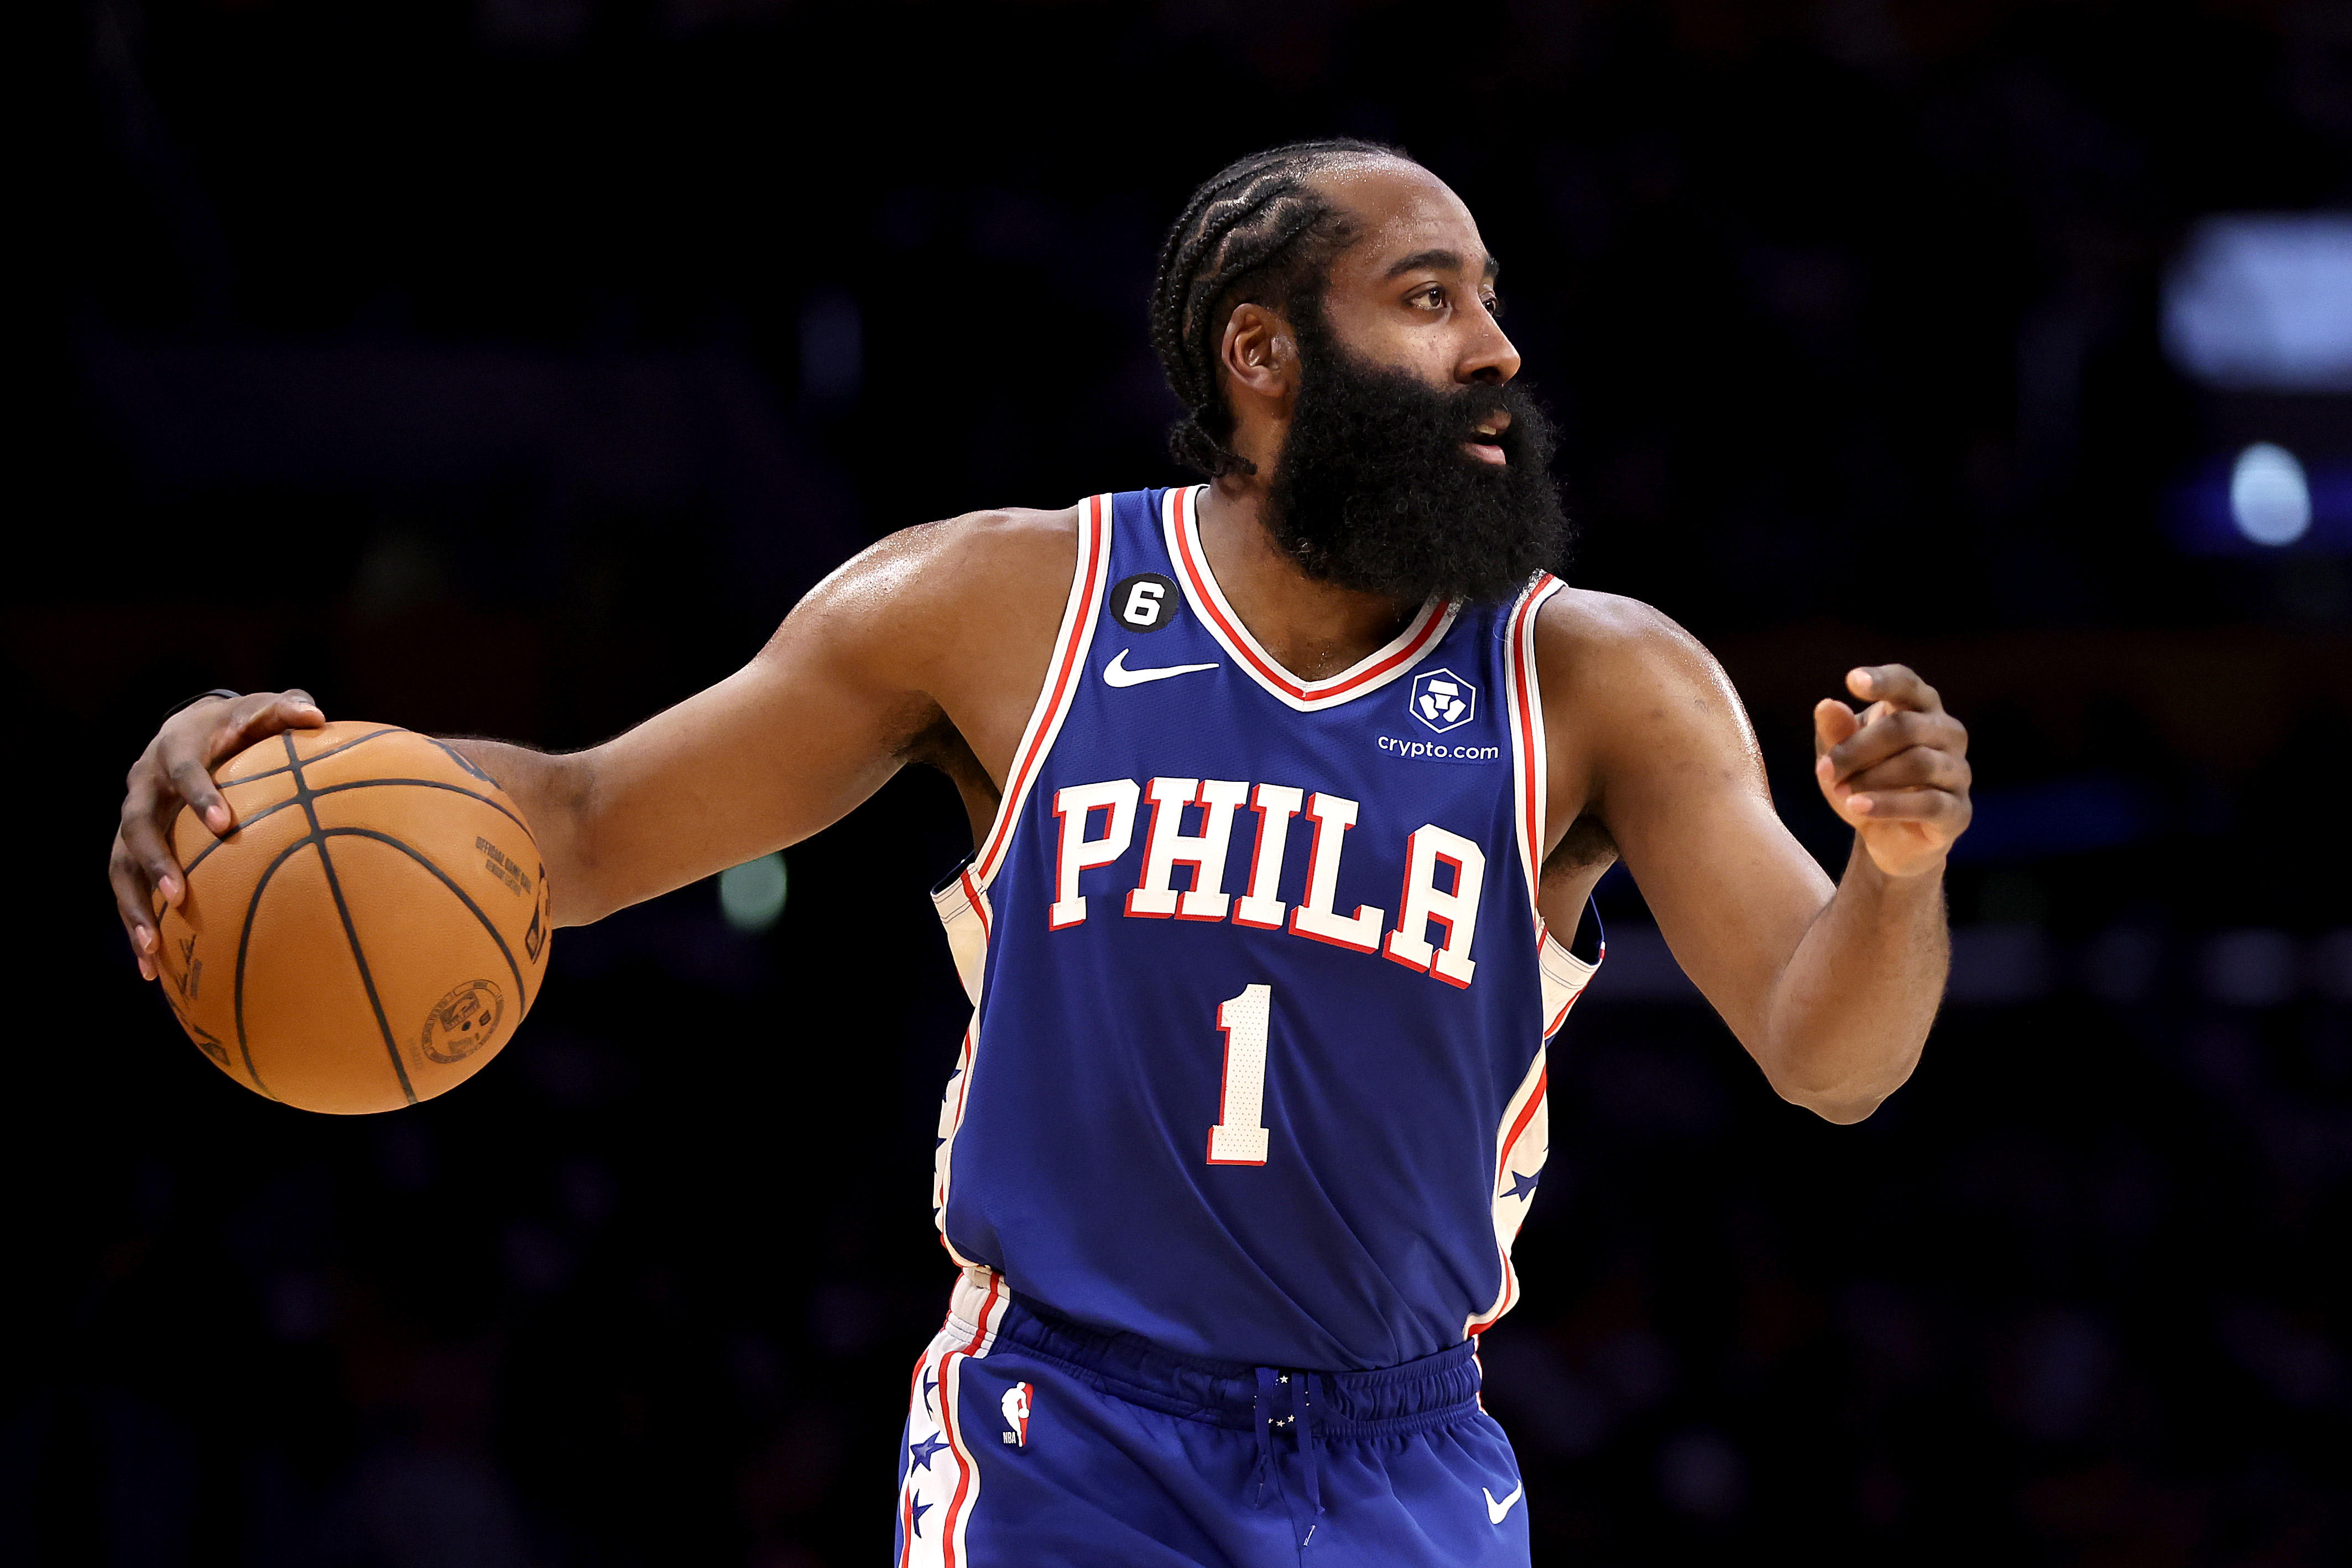 Brooklyn Nets vs Philadelphia 76ers Odds - Monday April 17 2023